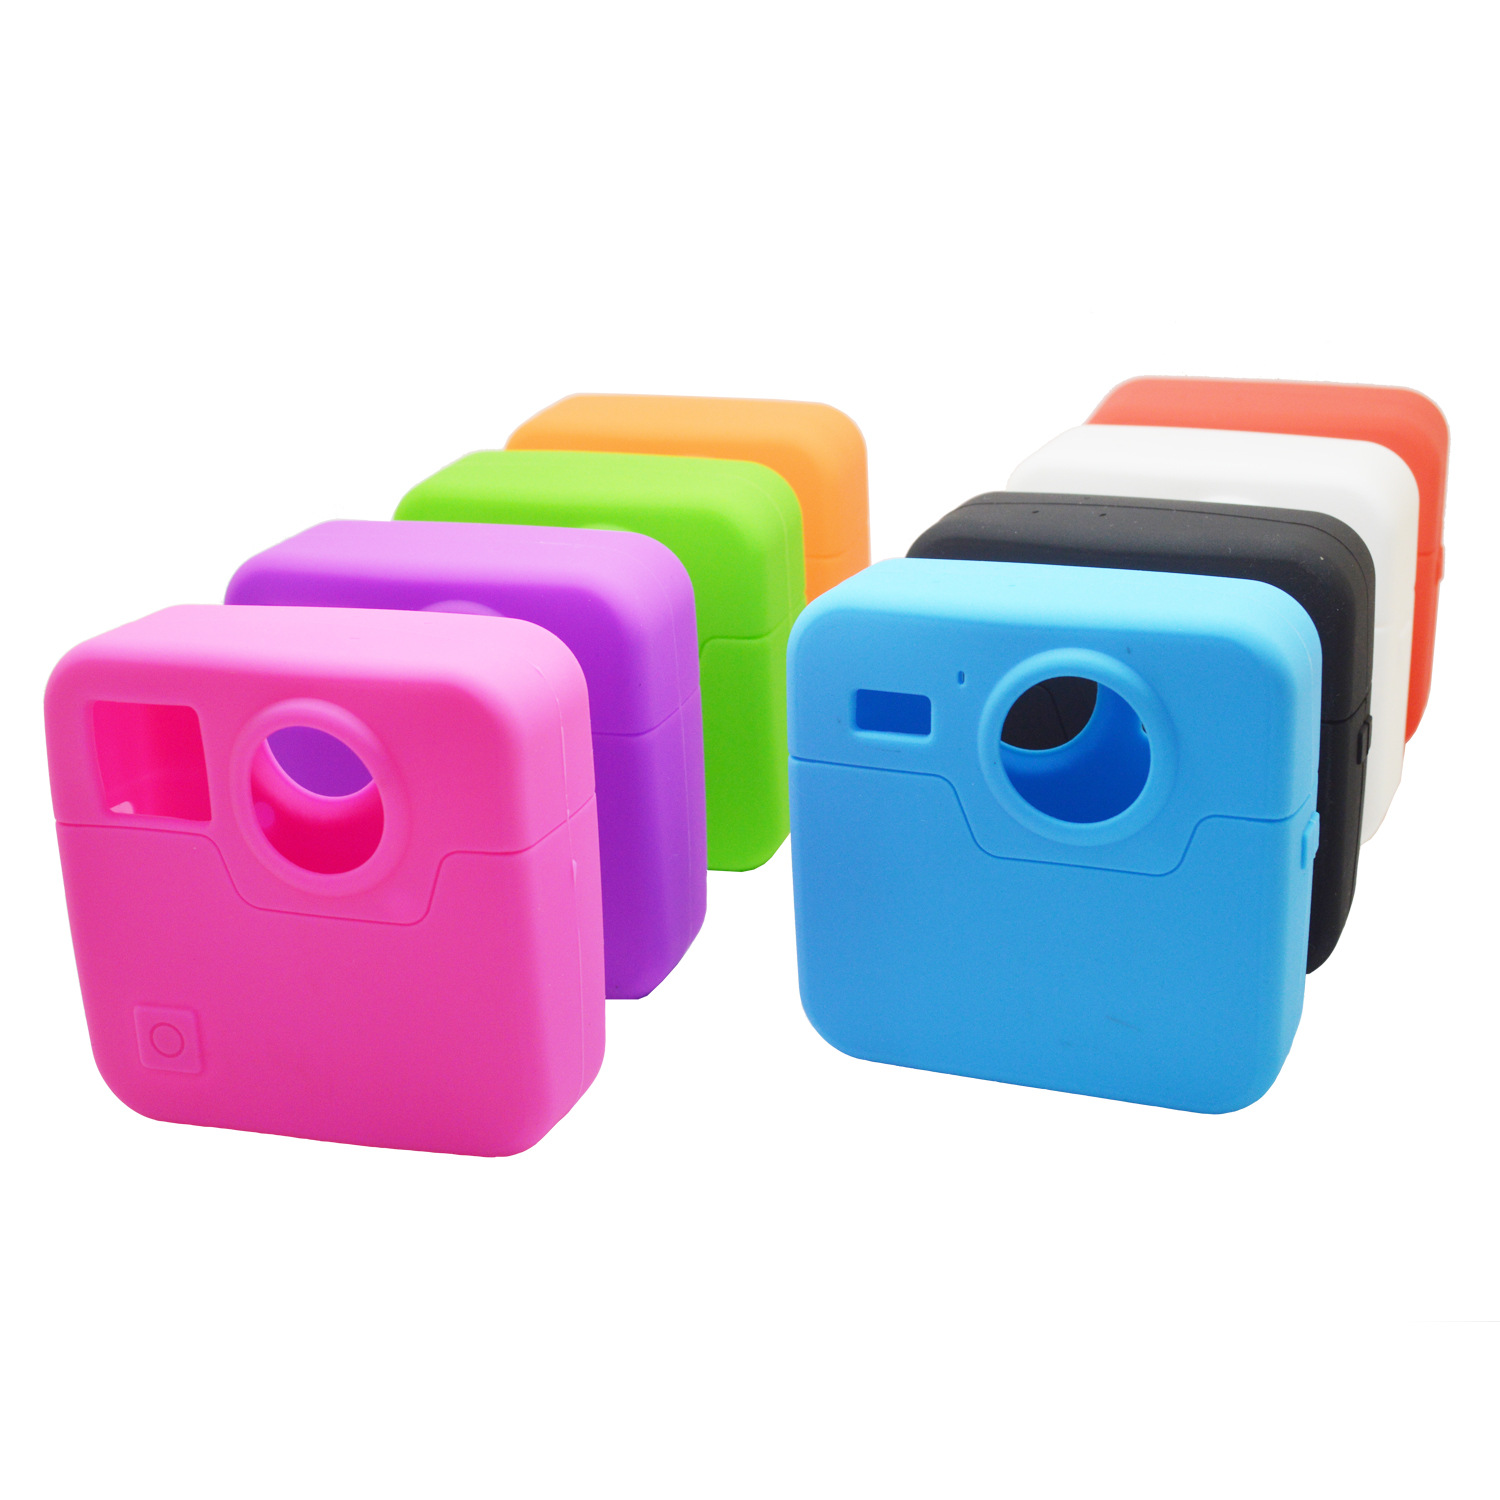 Silicone-Protective-Case-Skin-Cover-Camera-Accessories-for-GoPro-Fusion-360-Camera-8-Colors-1238129-8